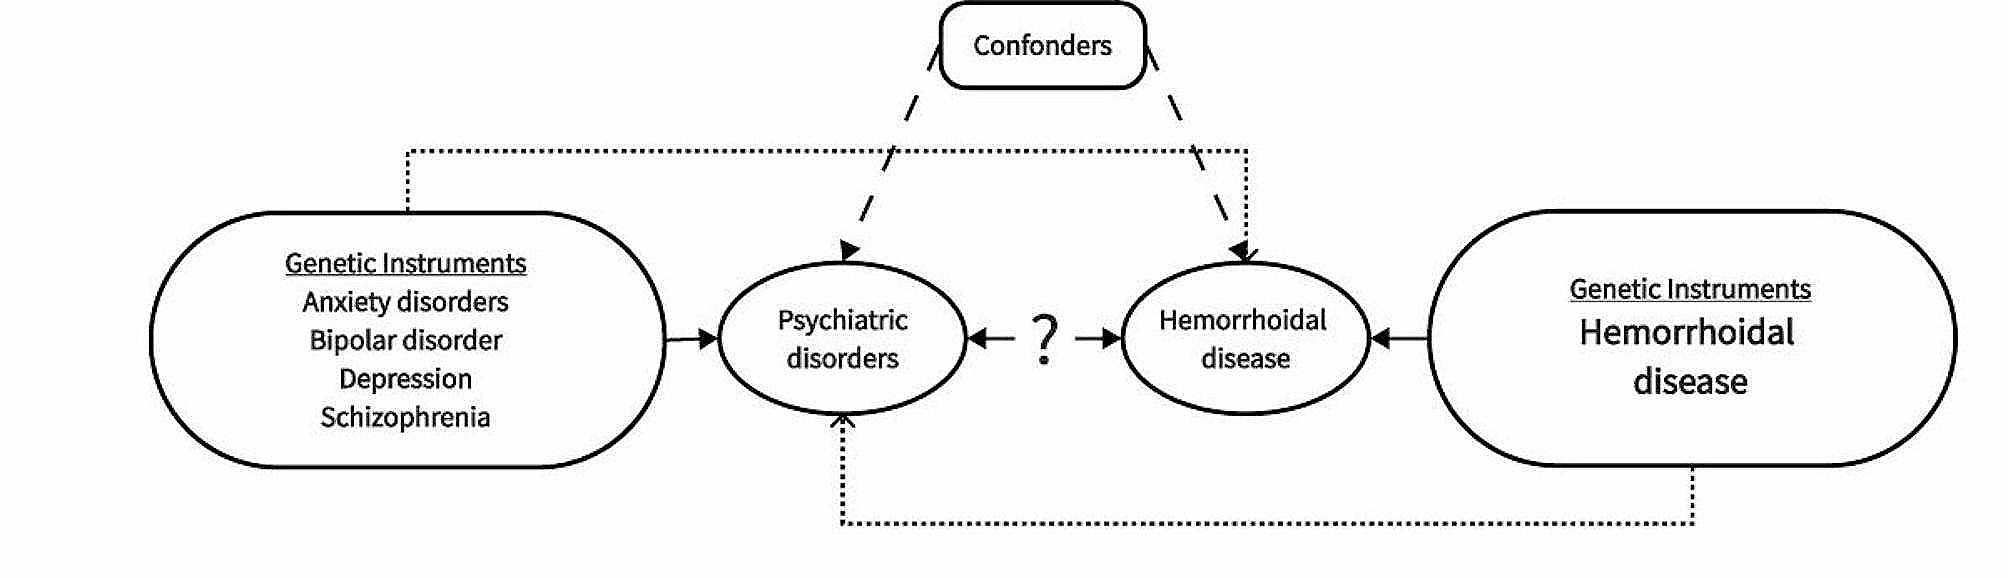 Hemorrhoidal disease and its genetic association with depression, bipolar disorder, anxiety disorders, and schizophrenia: a bidirectional mendelian randomization study